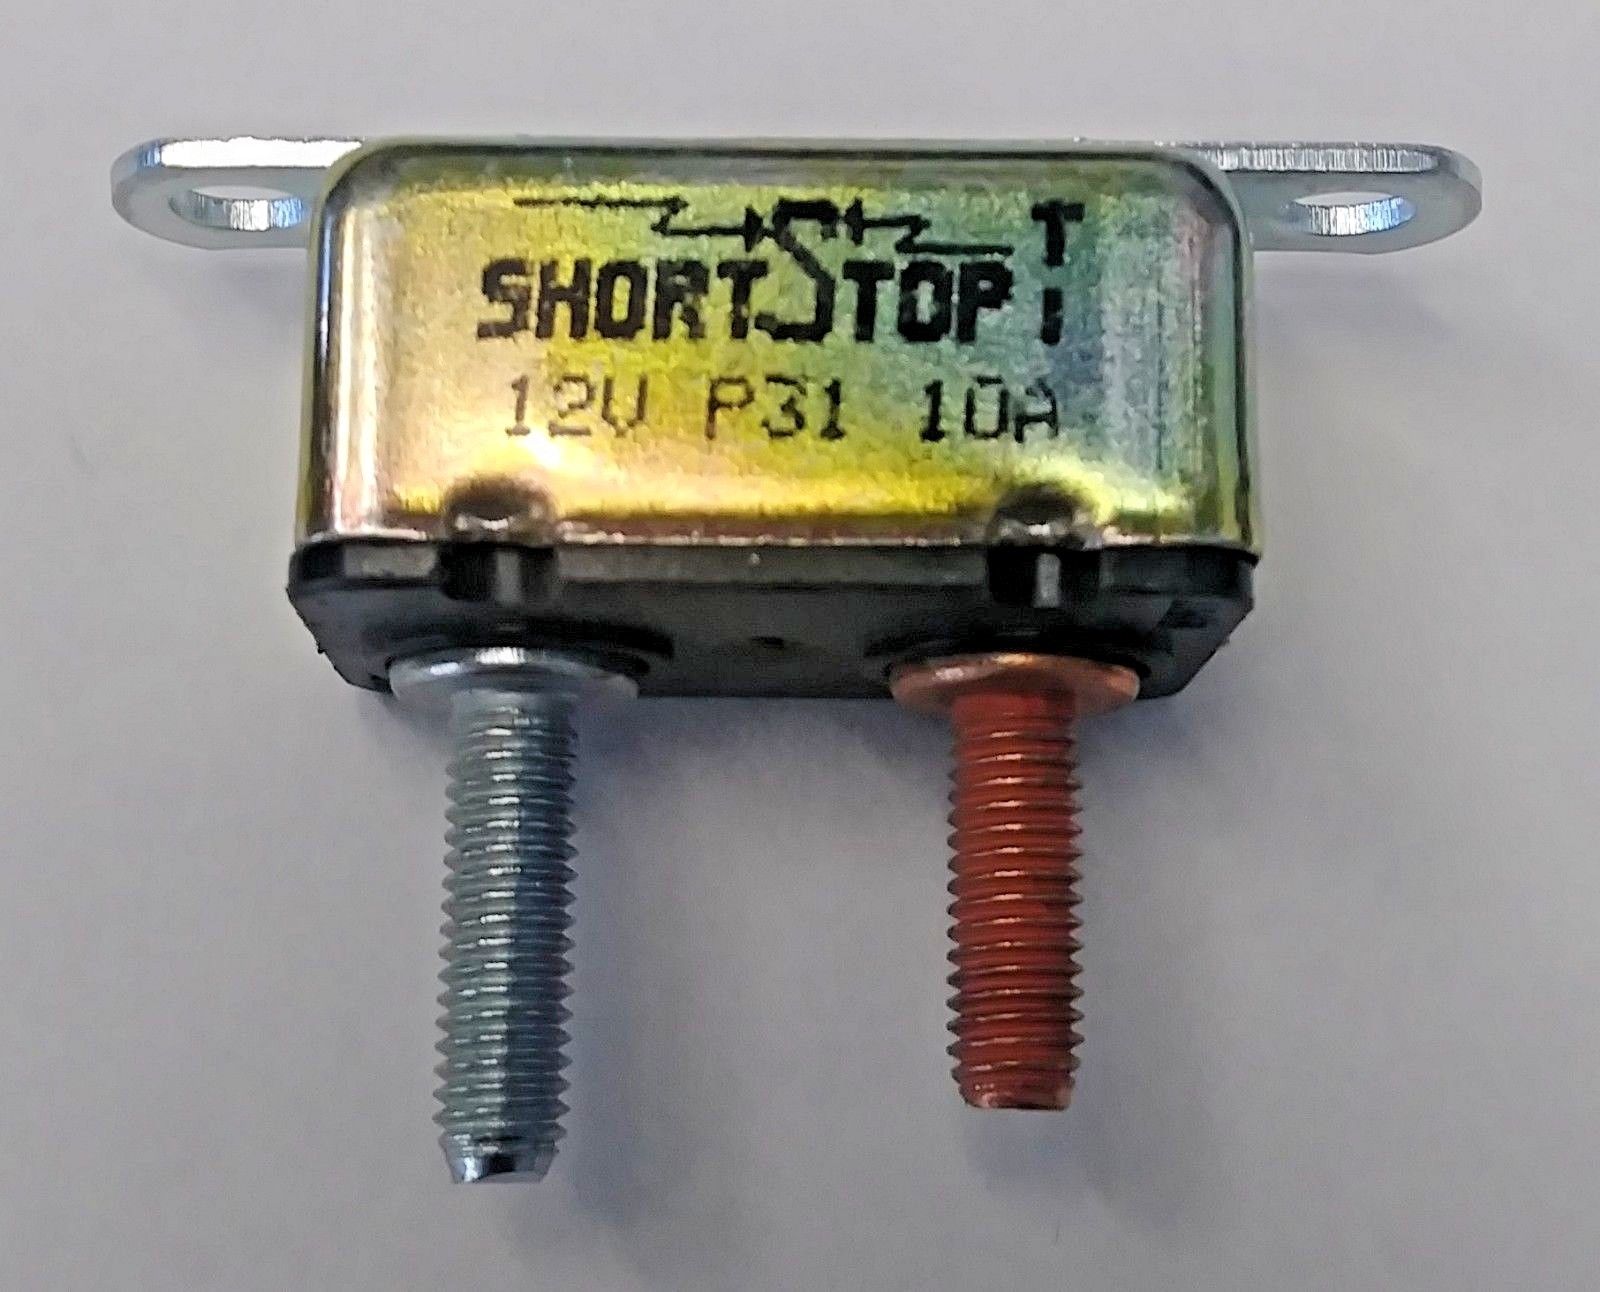 Bussmann Short Stop 71106 10 Amp Auto Reset Circuit Breaker 12 Volt (1 Piece)